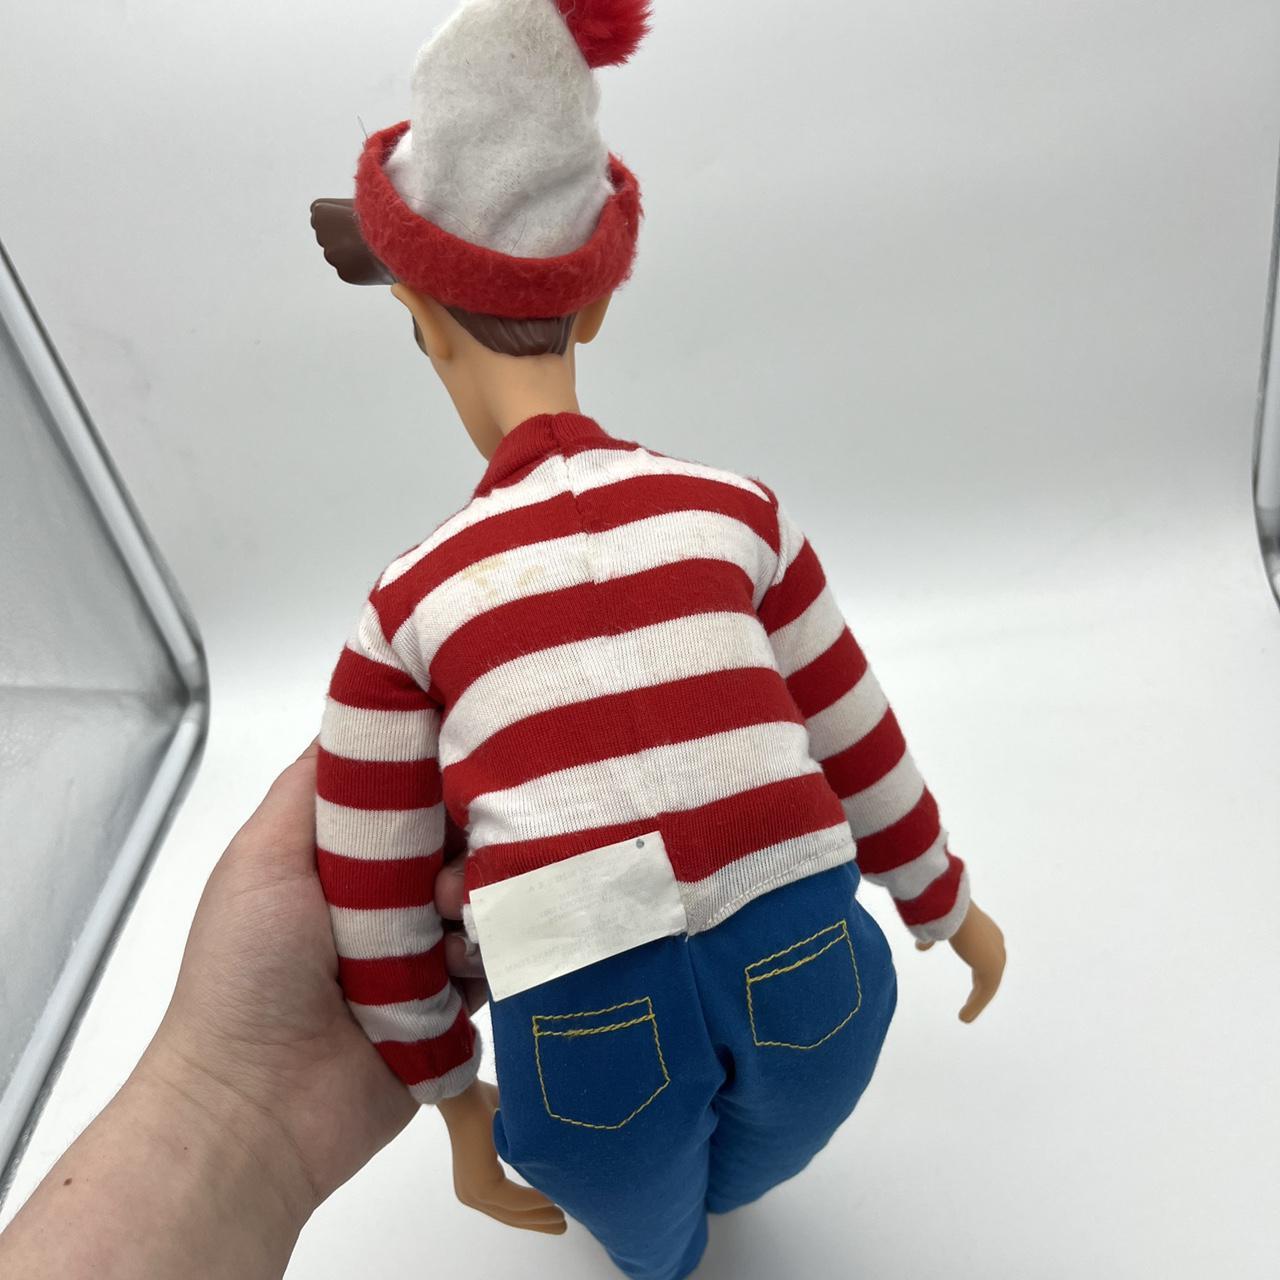 Product Image 2 - Where’s Waldo Doll

•Vintage Where’s Waldo